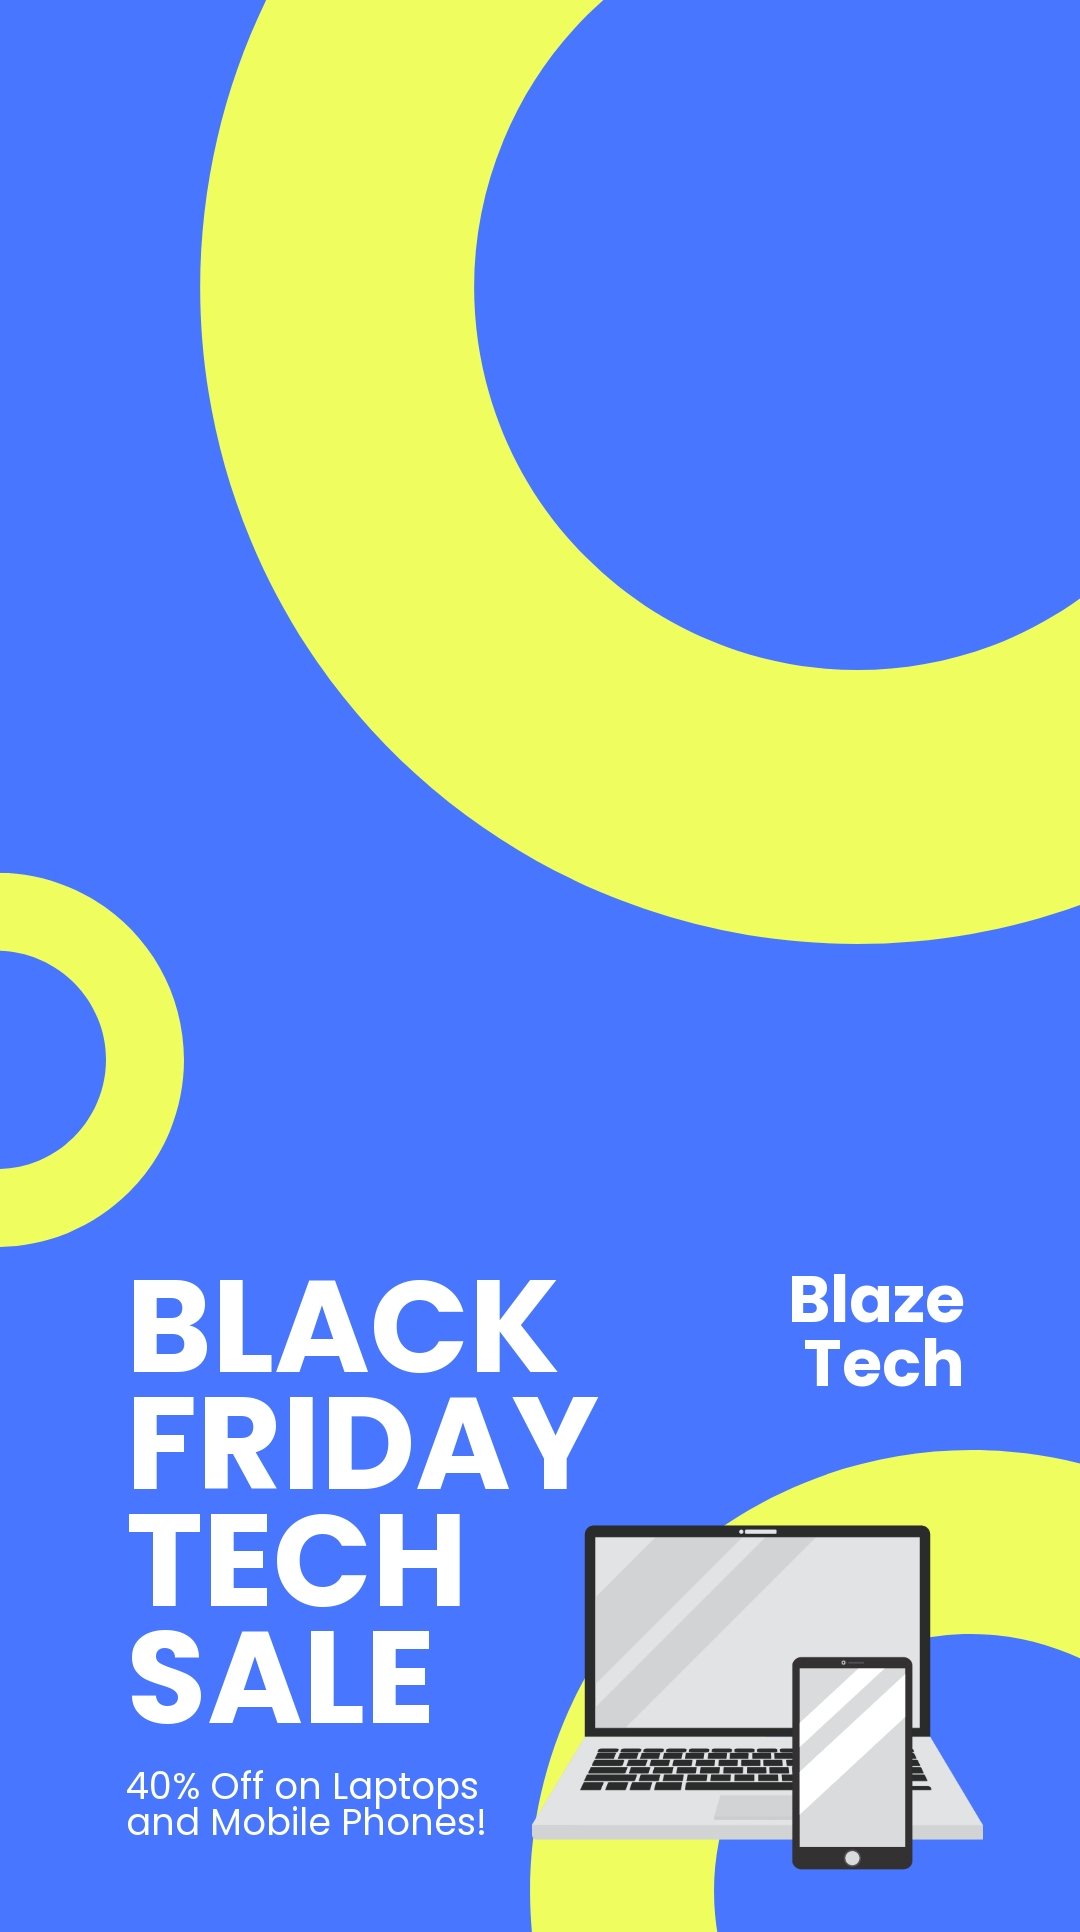 Black Friday Tech Sale Snapchat Geofilter